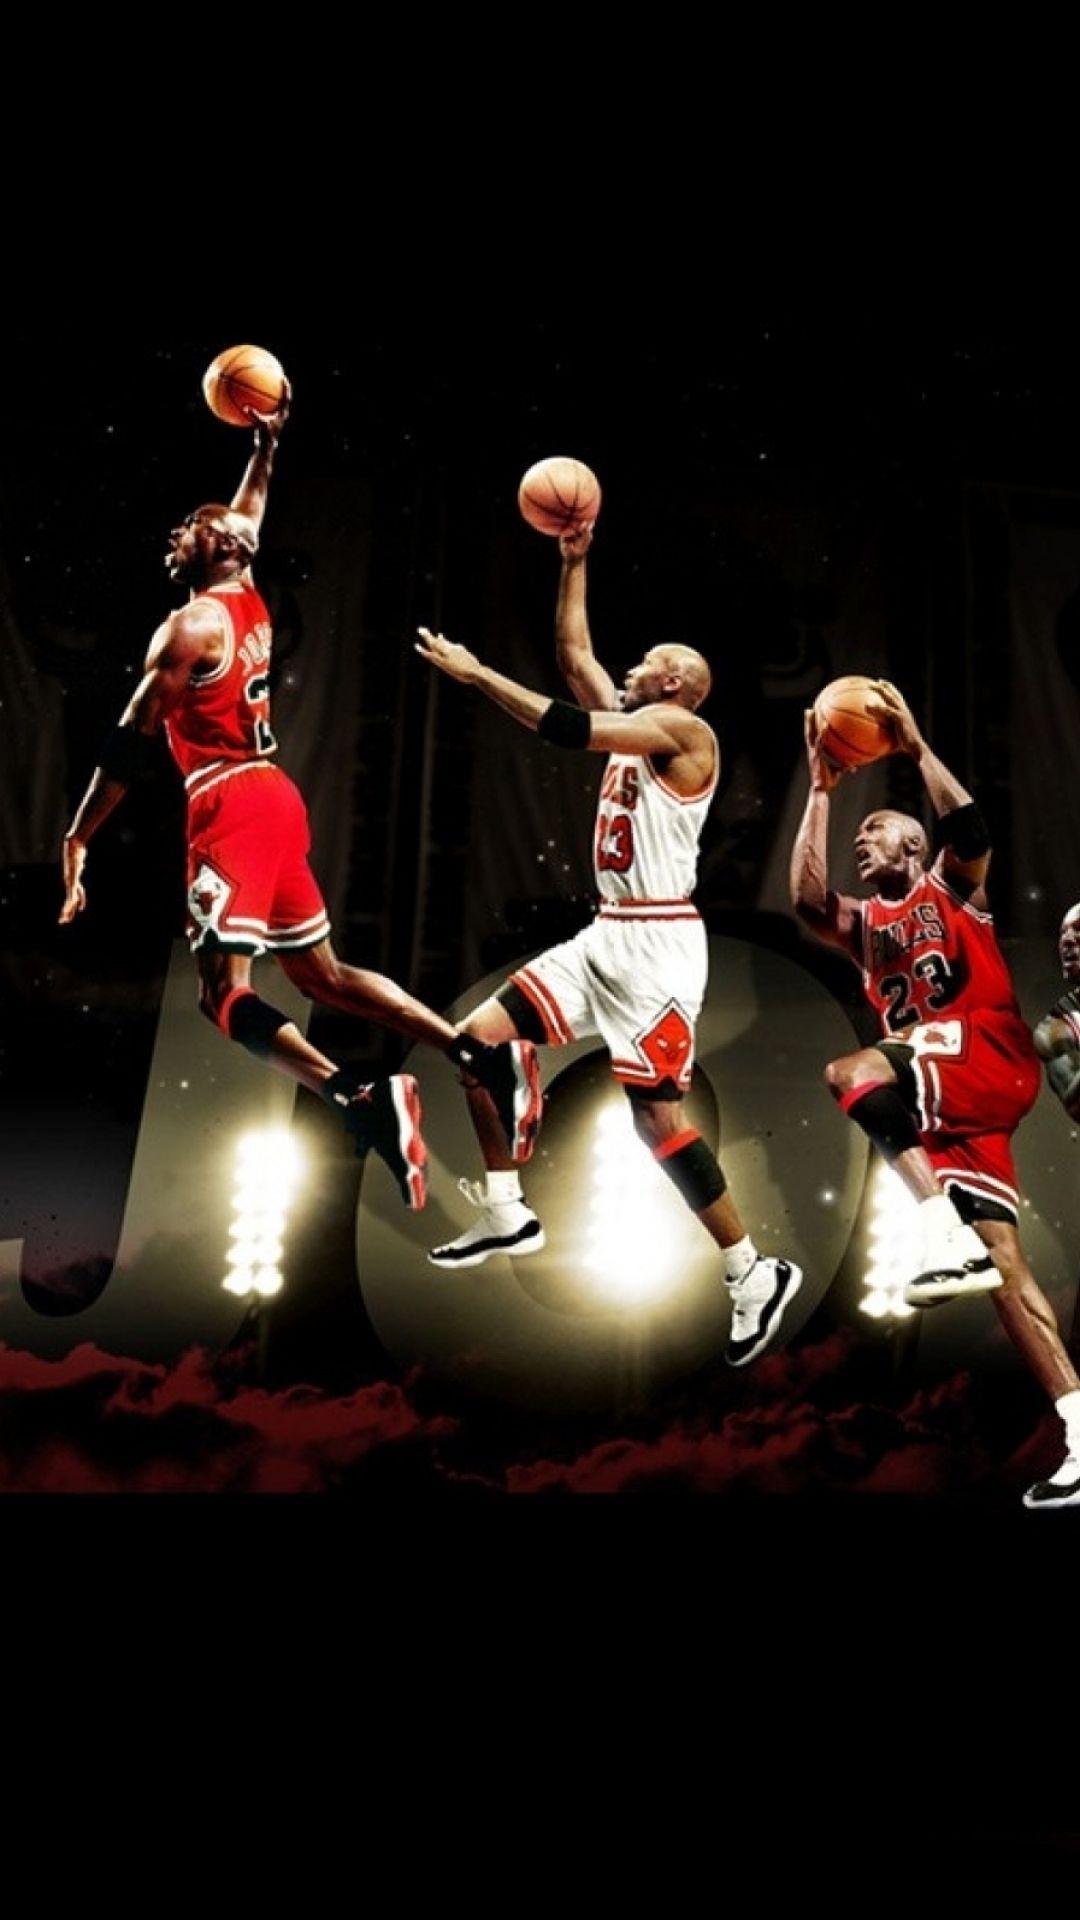 Nike air jordan wallpaper by fvrnvndo  Download on ZEDGE  de16